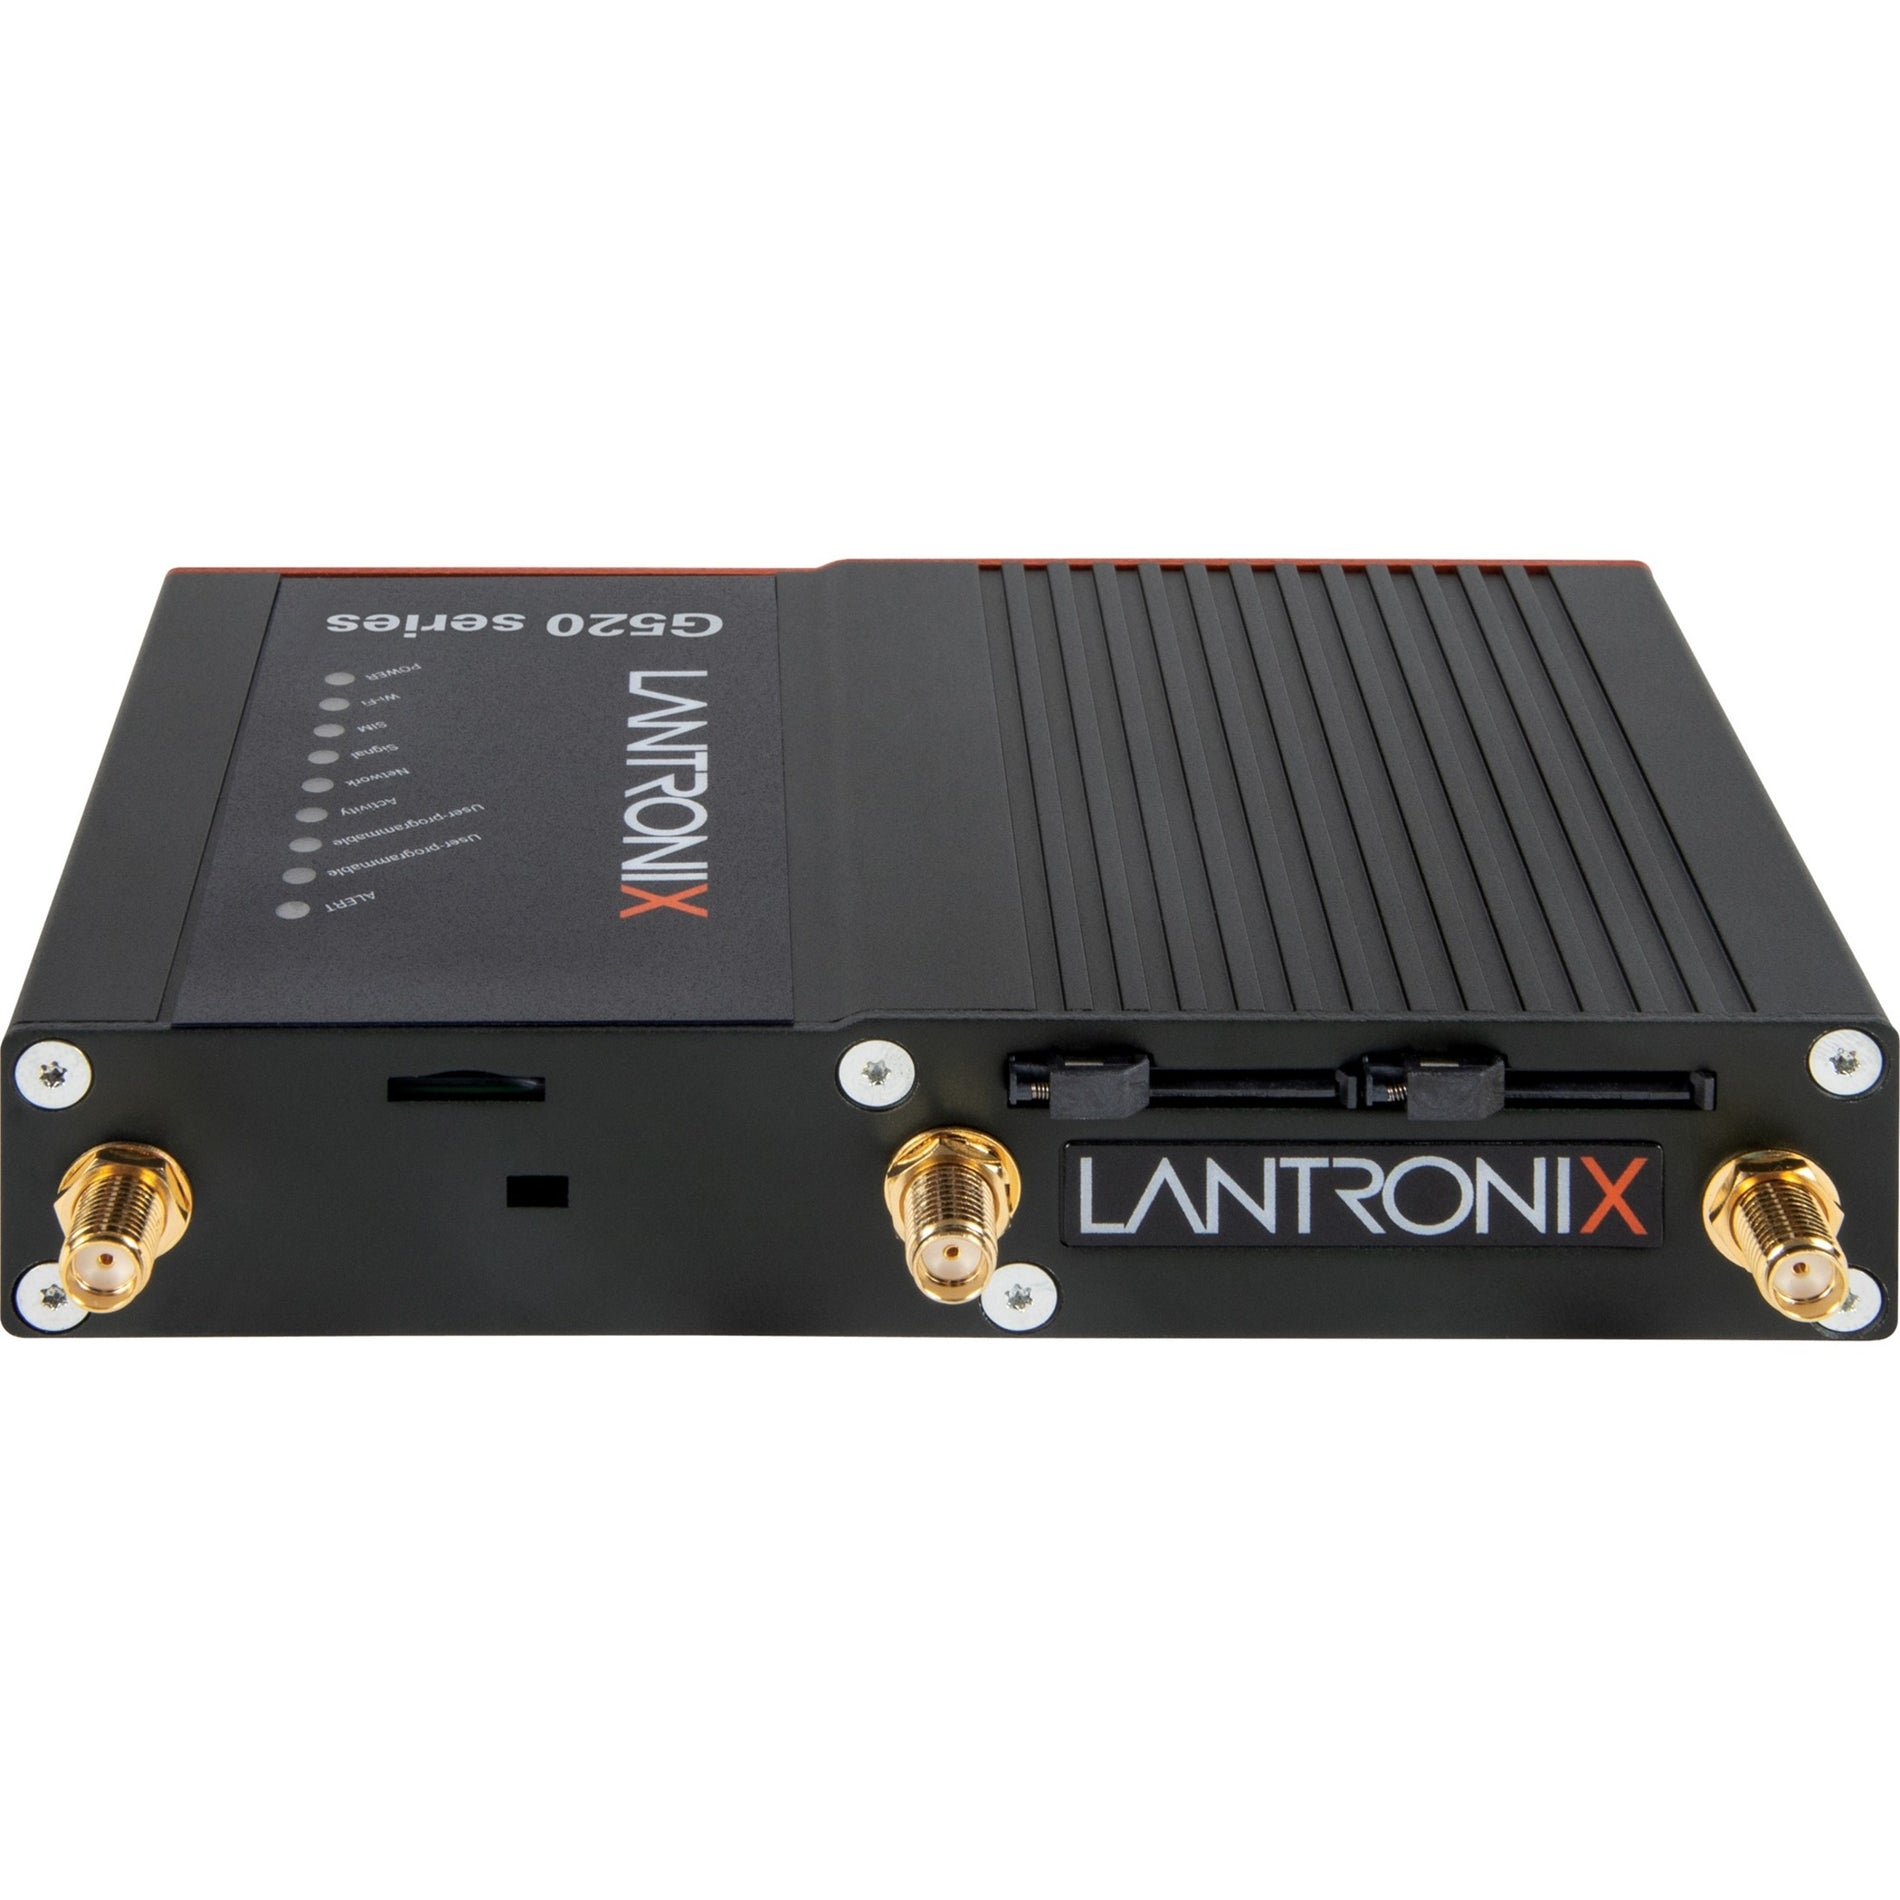 Lantronix G526GP1AS1B01 G520 Wireless Router, LTE Cellular, Fast Ethernet, 2 Antennas